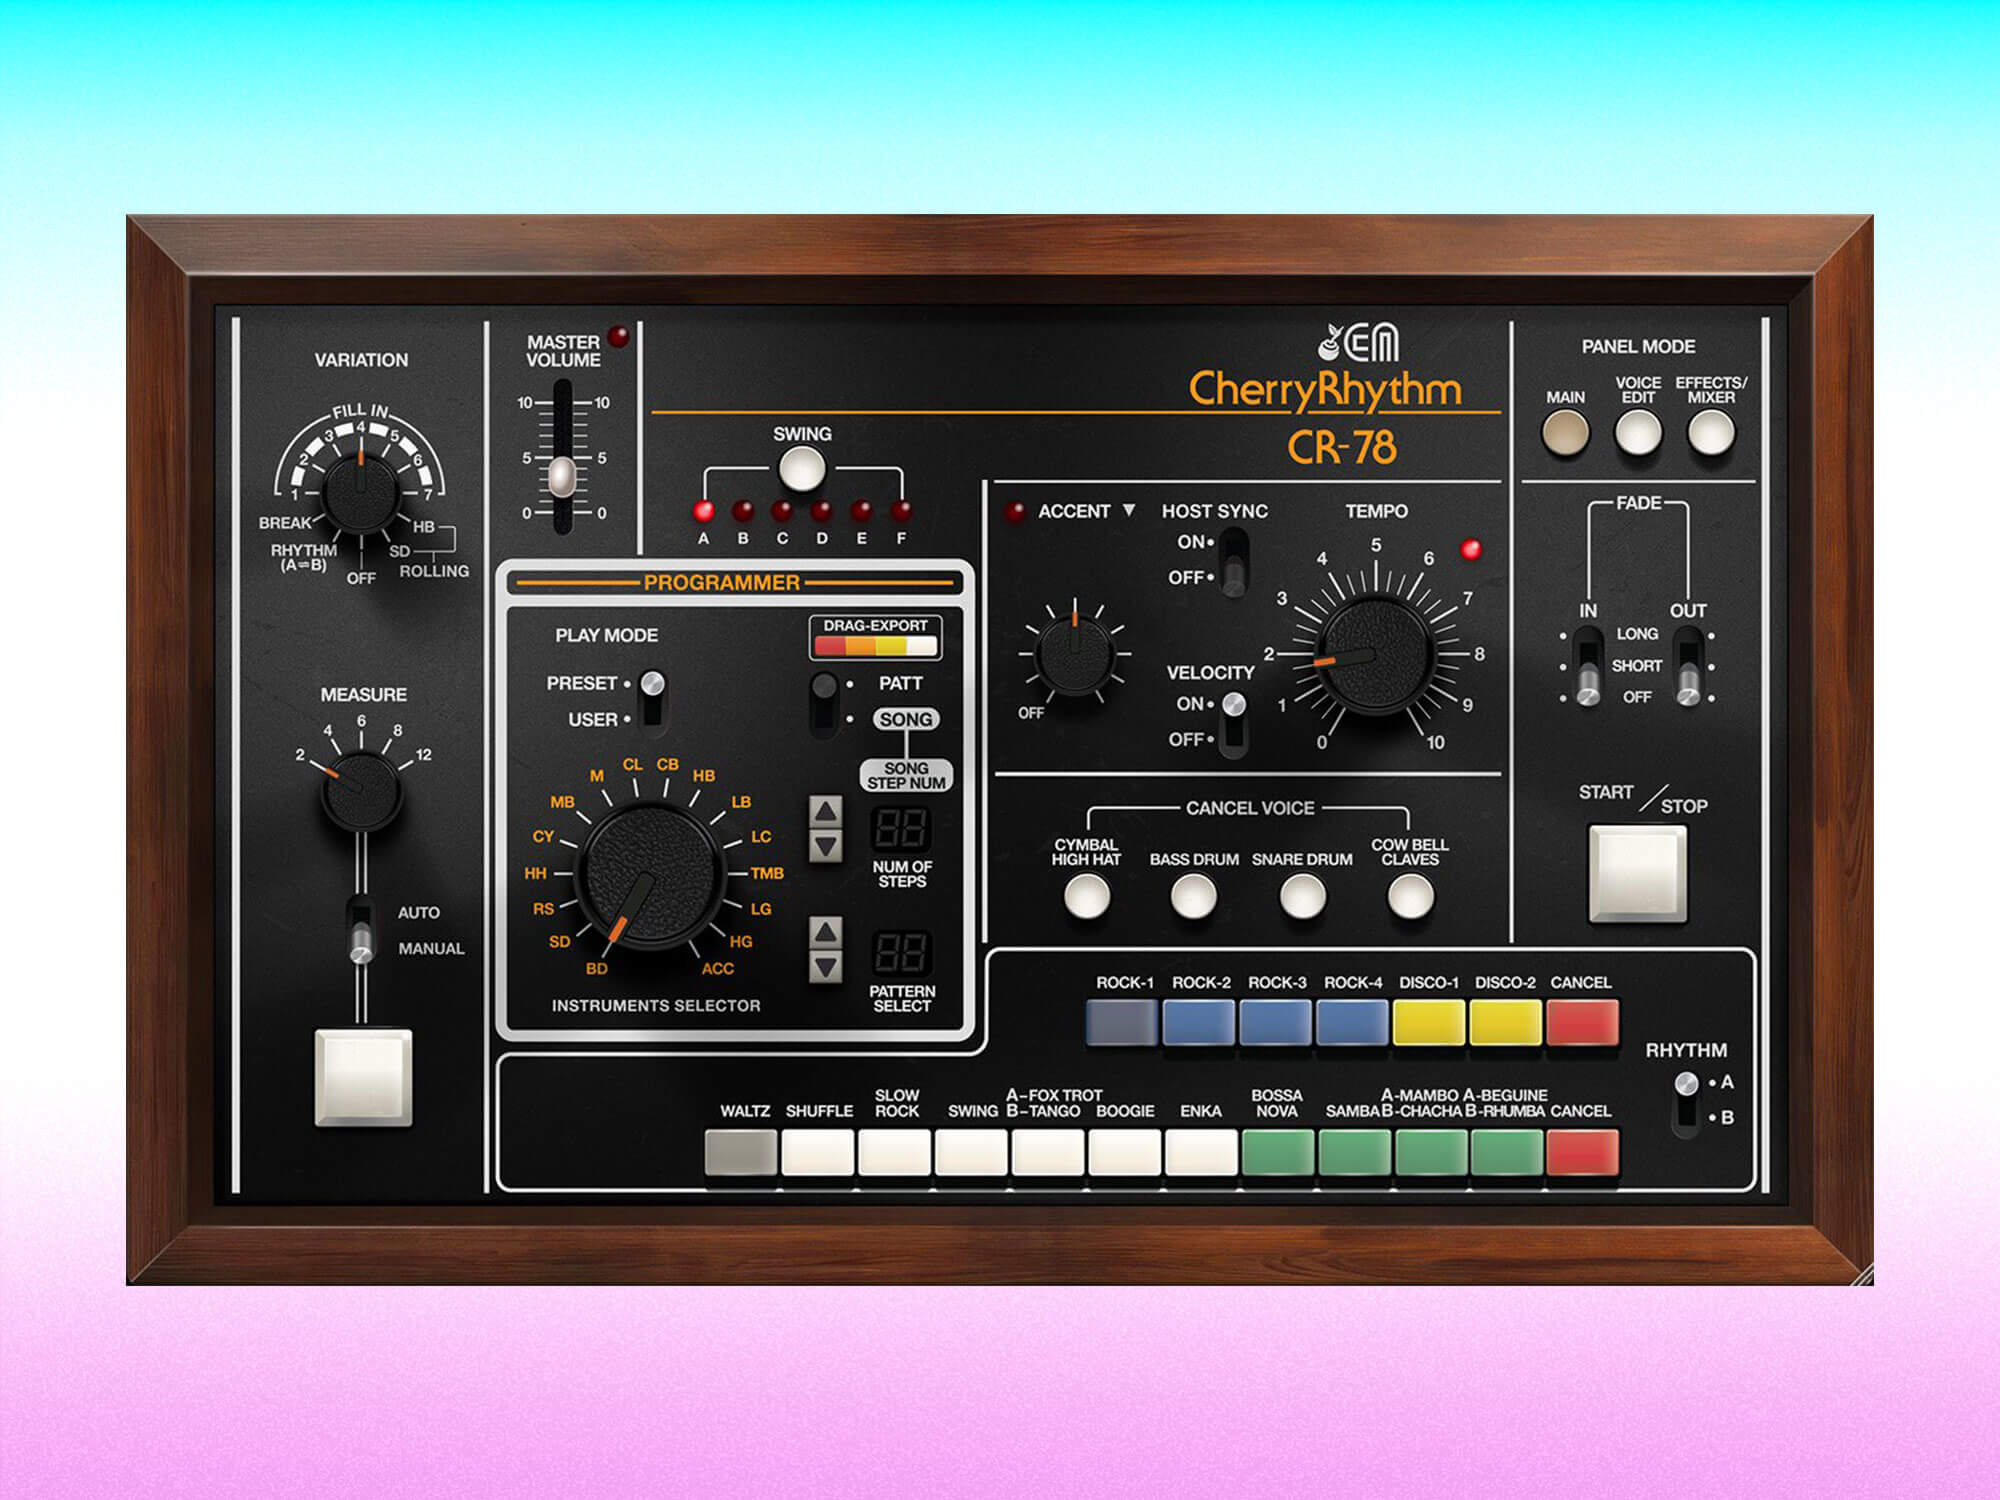 Cherry Audio CR-78 emulation